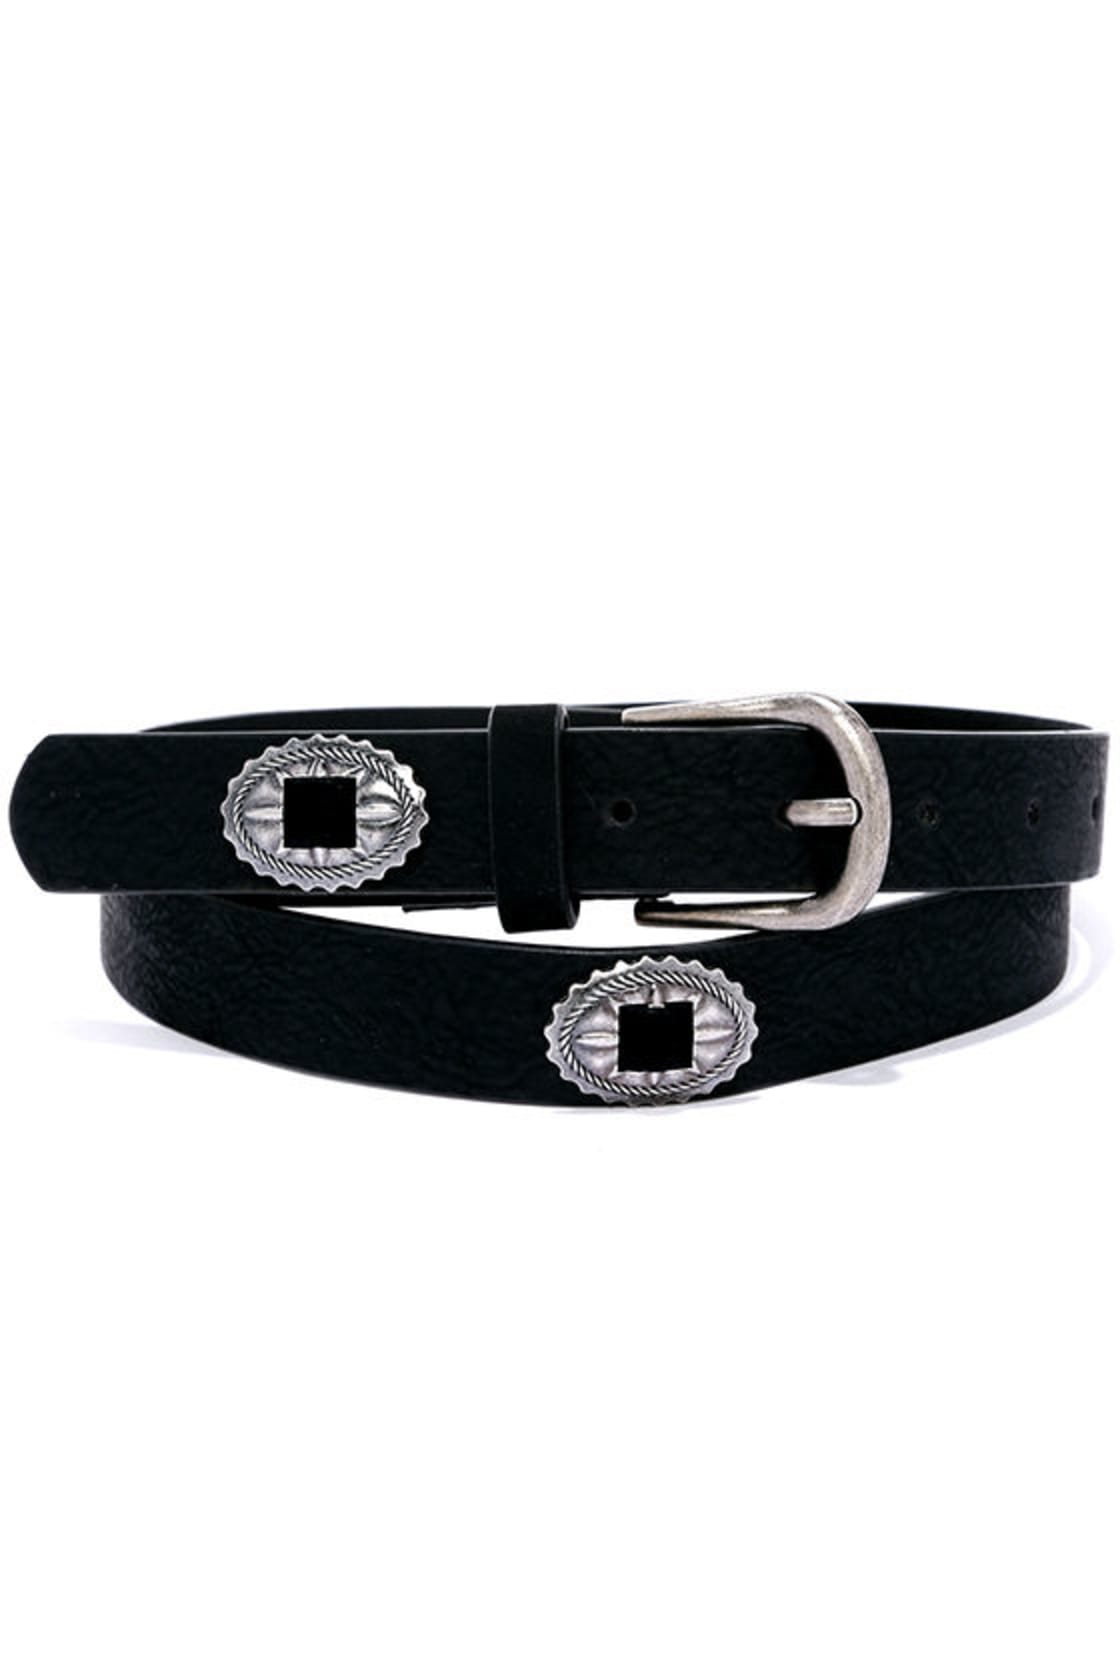 Cute Black Belt - Concho Belt - Faux Leather Belt - $13.00 - Lulus